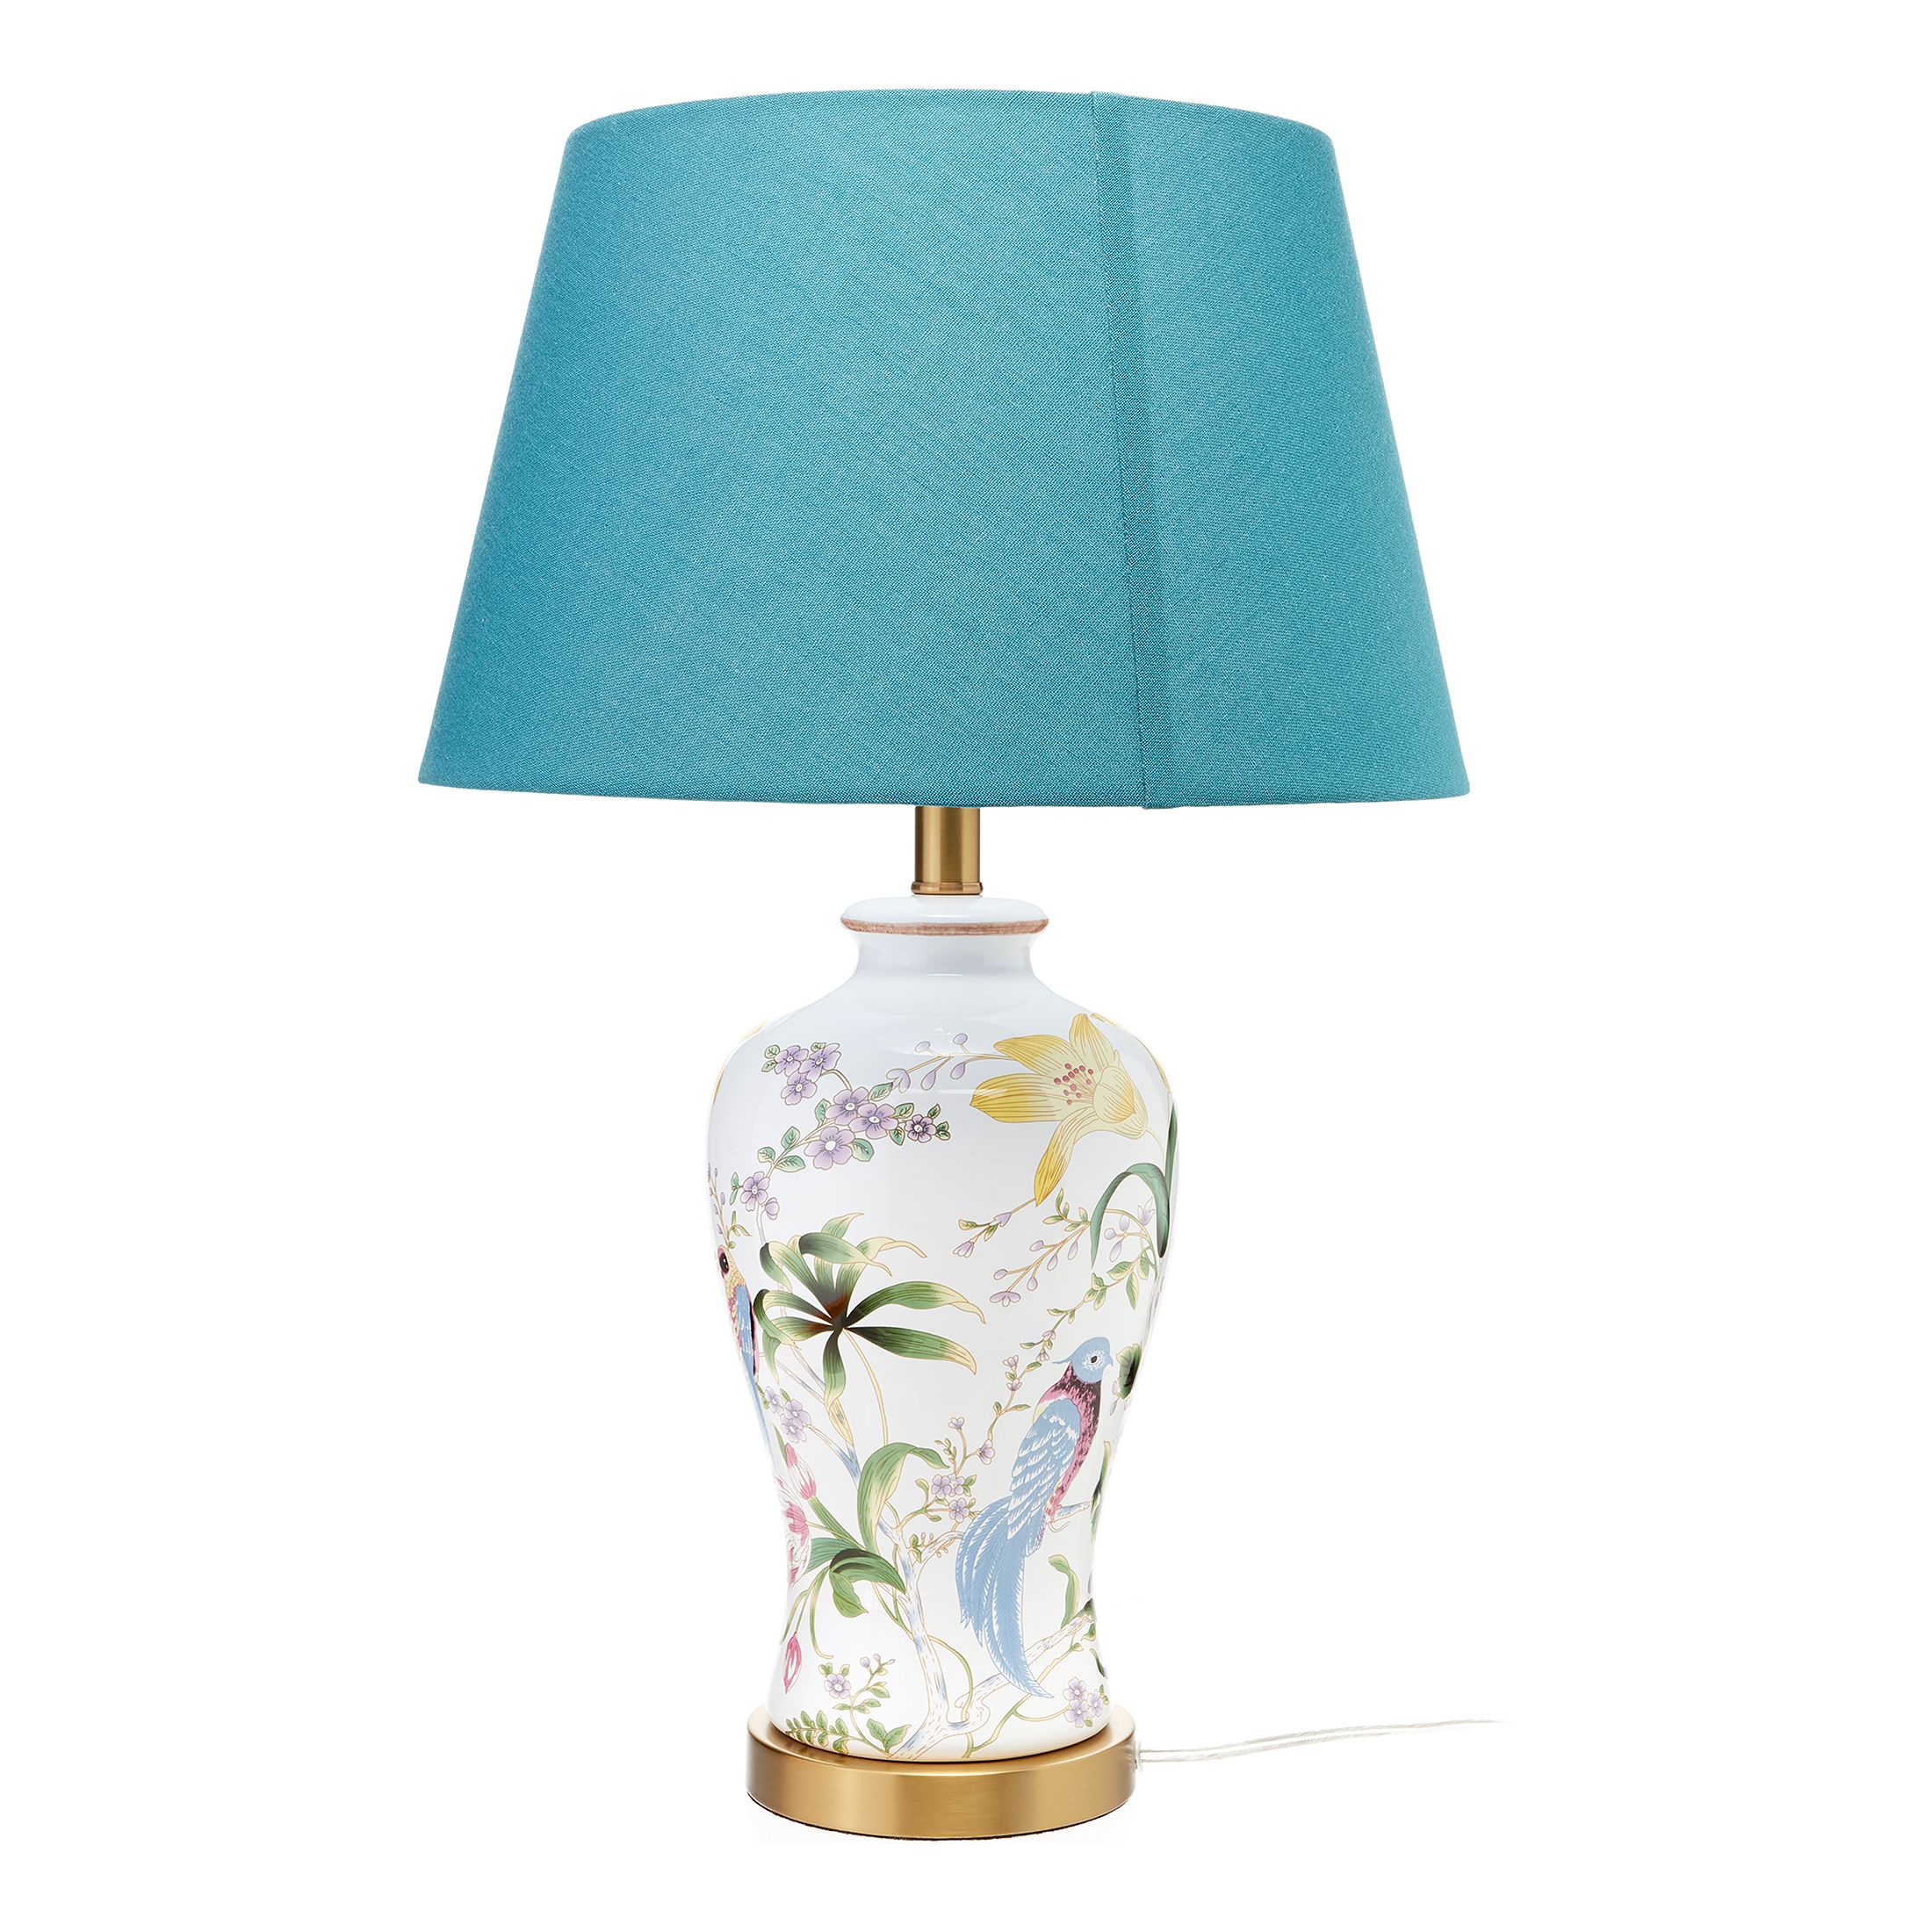 The Enchanting Aviary Table Lamp